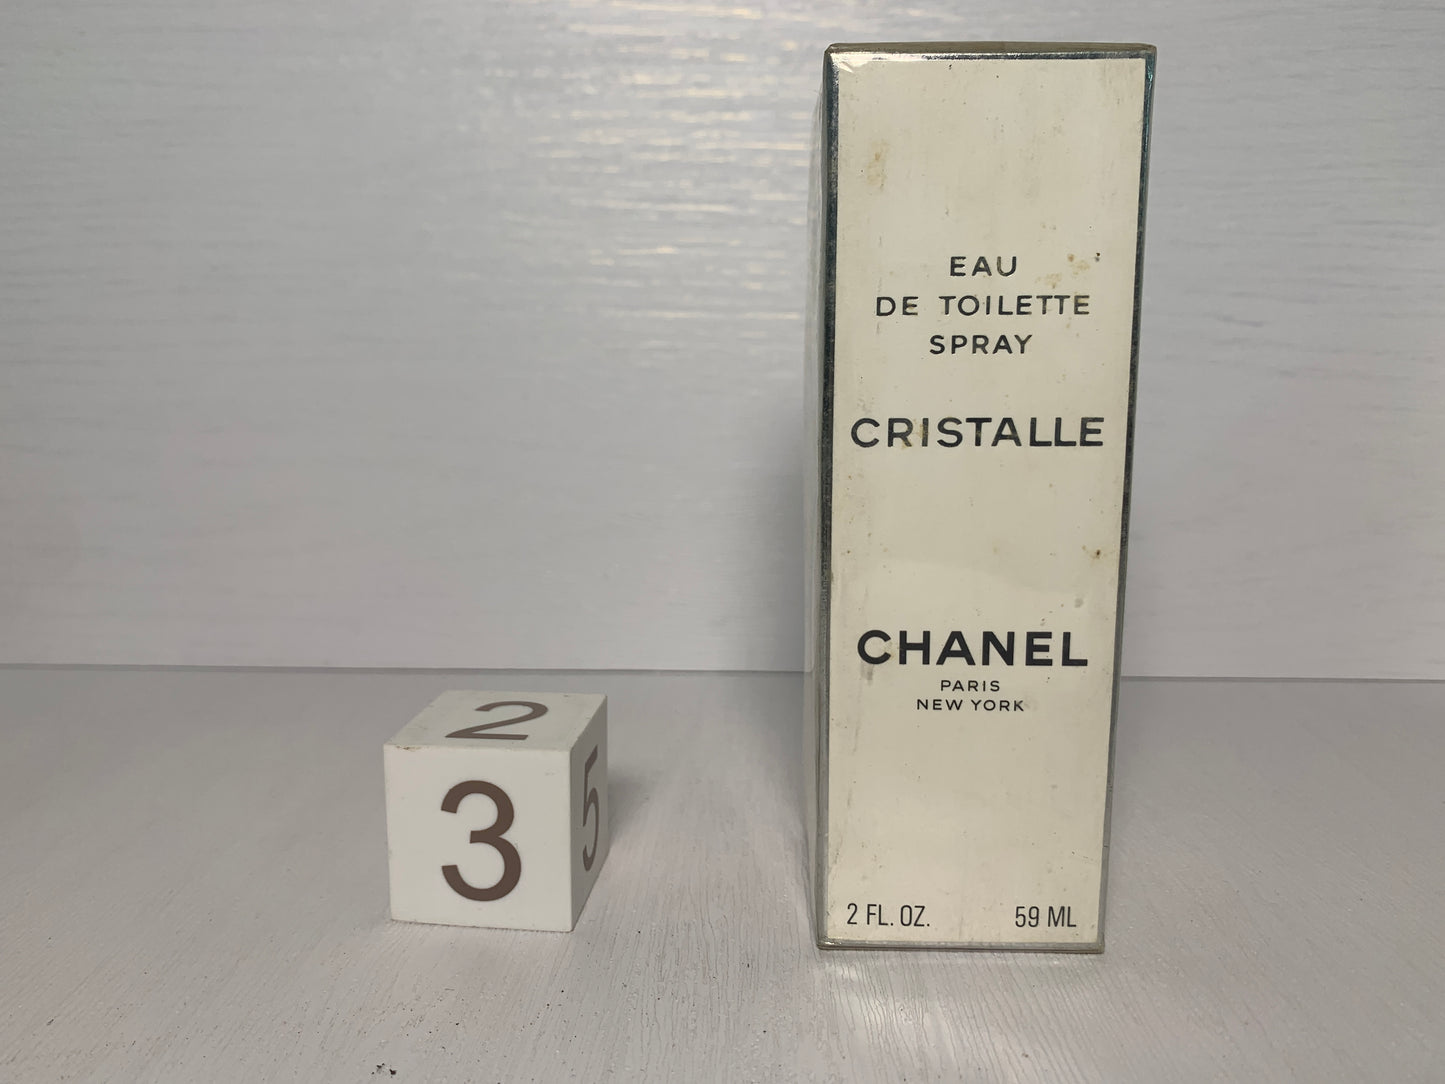 Chanel No. 19 Perfume Alternative for Women - Composition - TAJ Brand